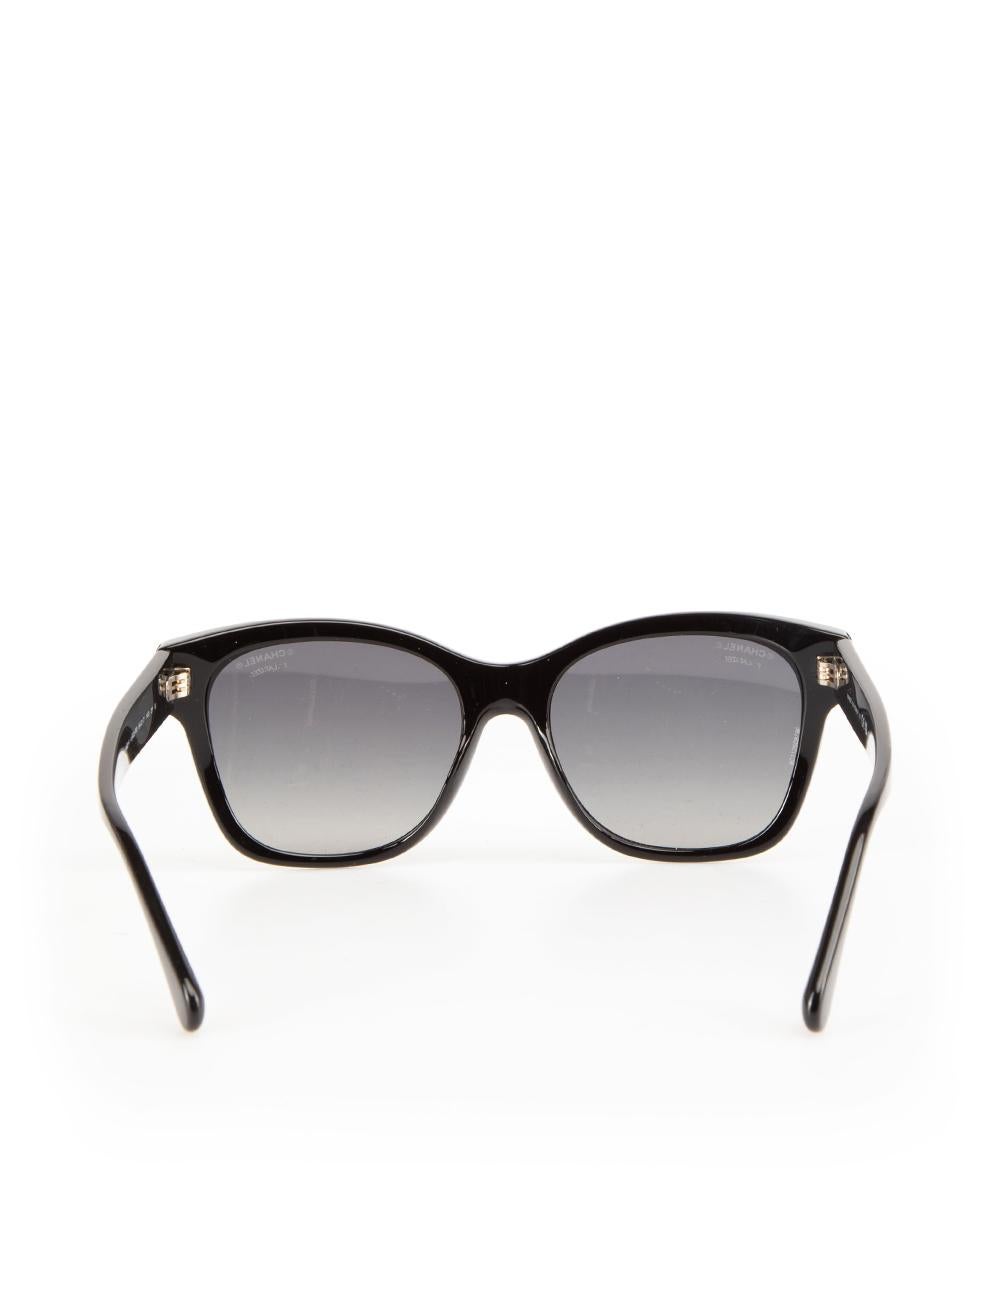 Women's Chanel Black Square Wayfarer Sunglasses